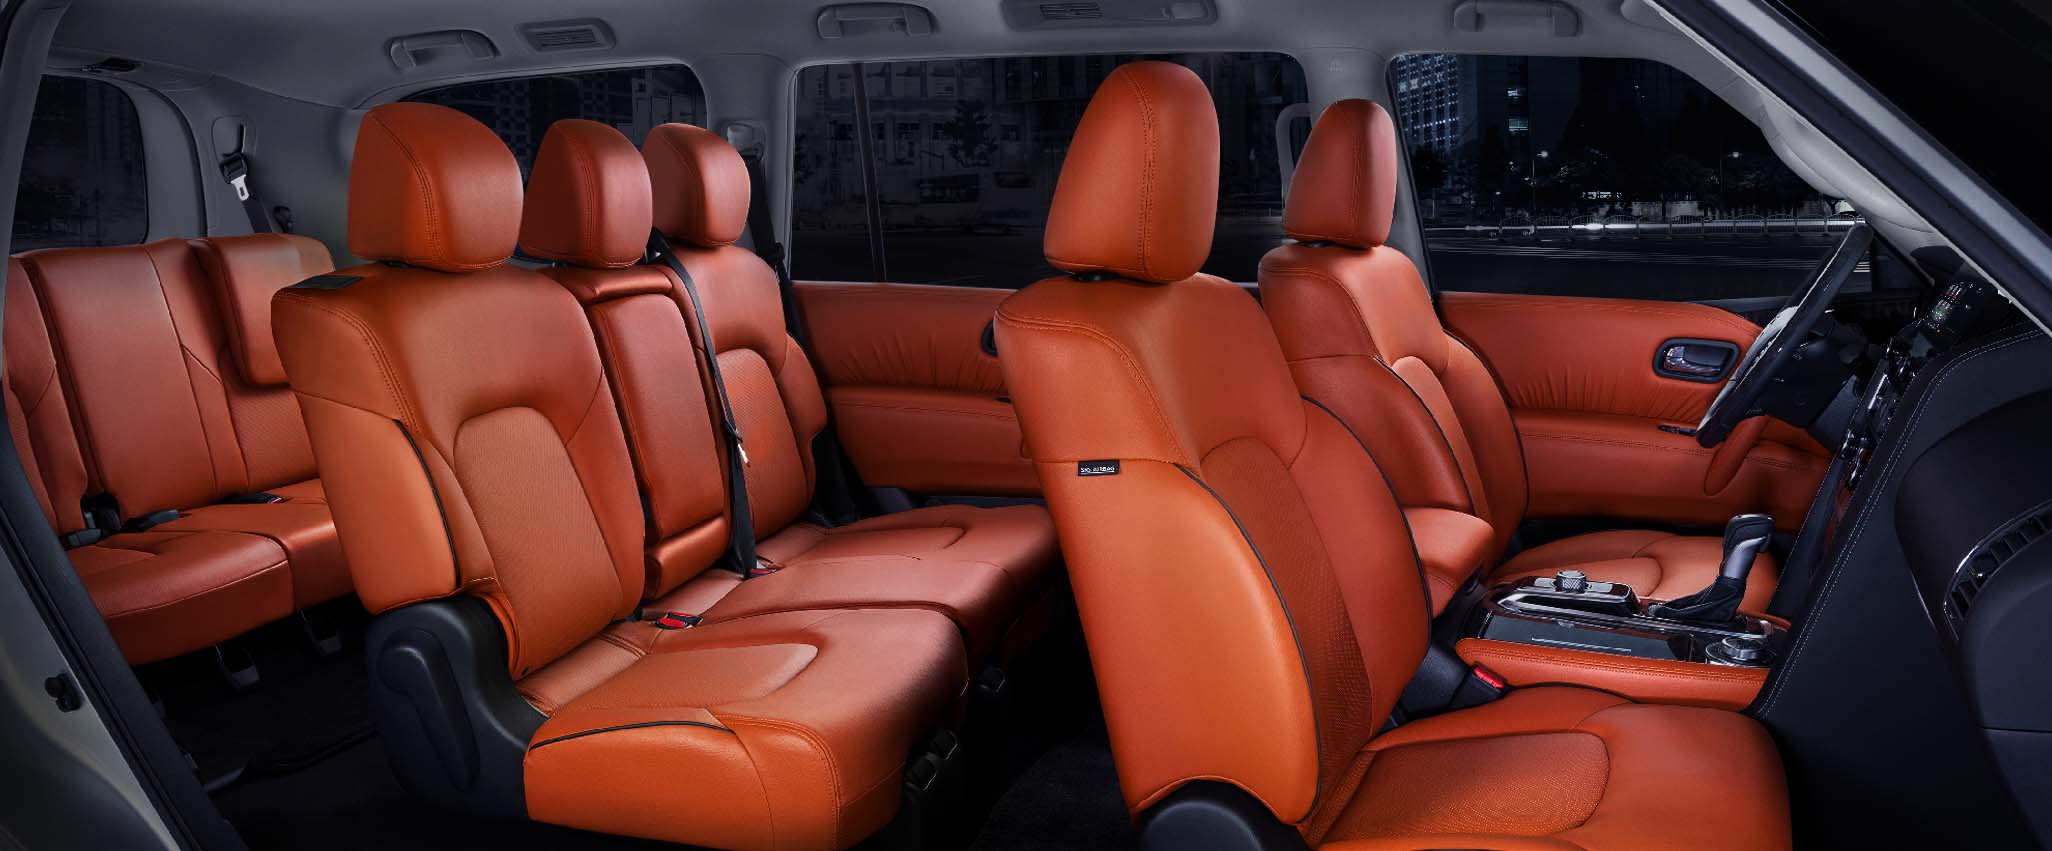 Nissan Patrol interior - Seats